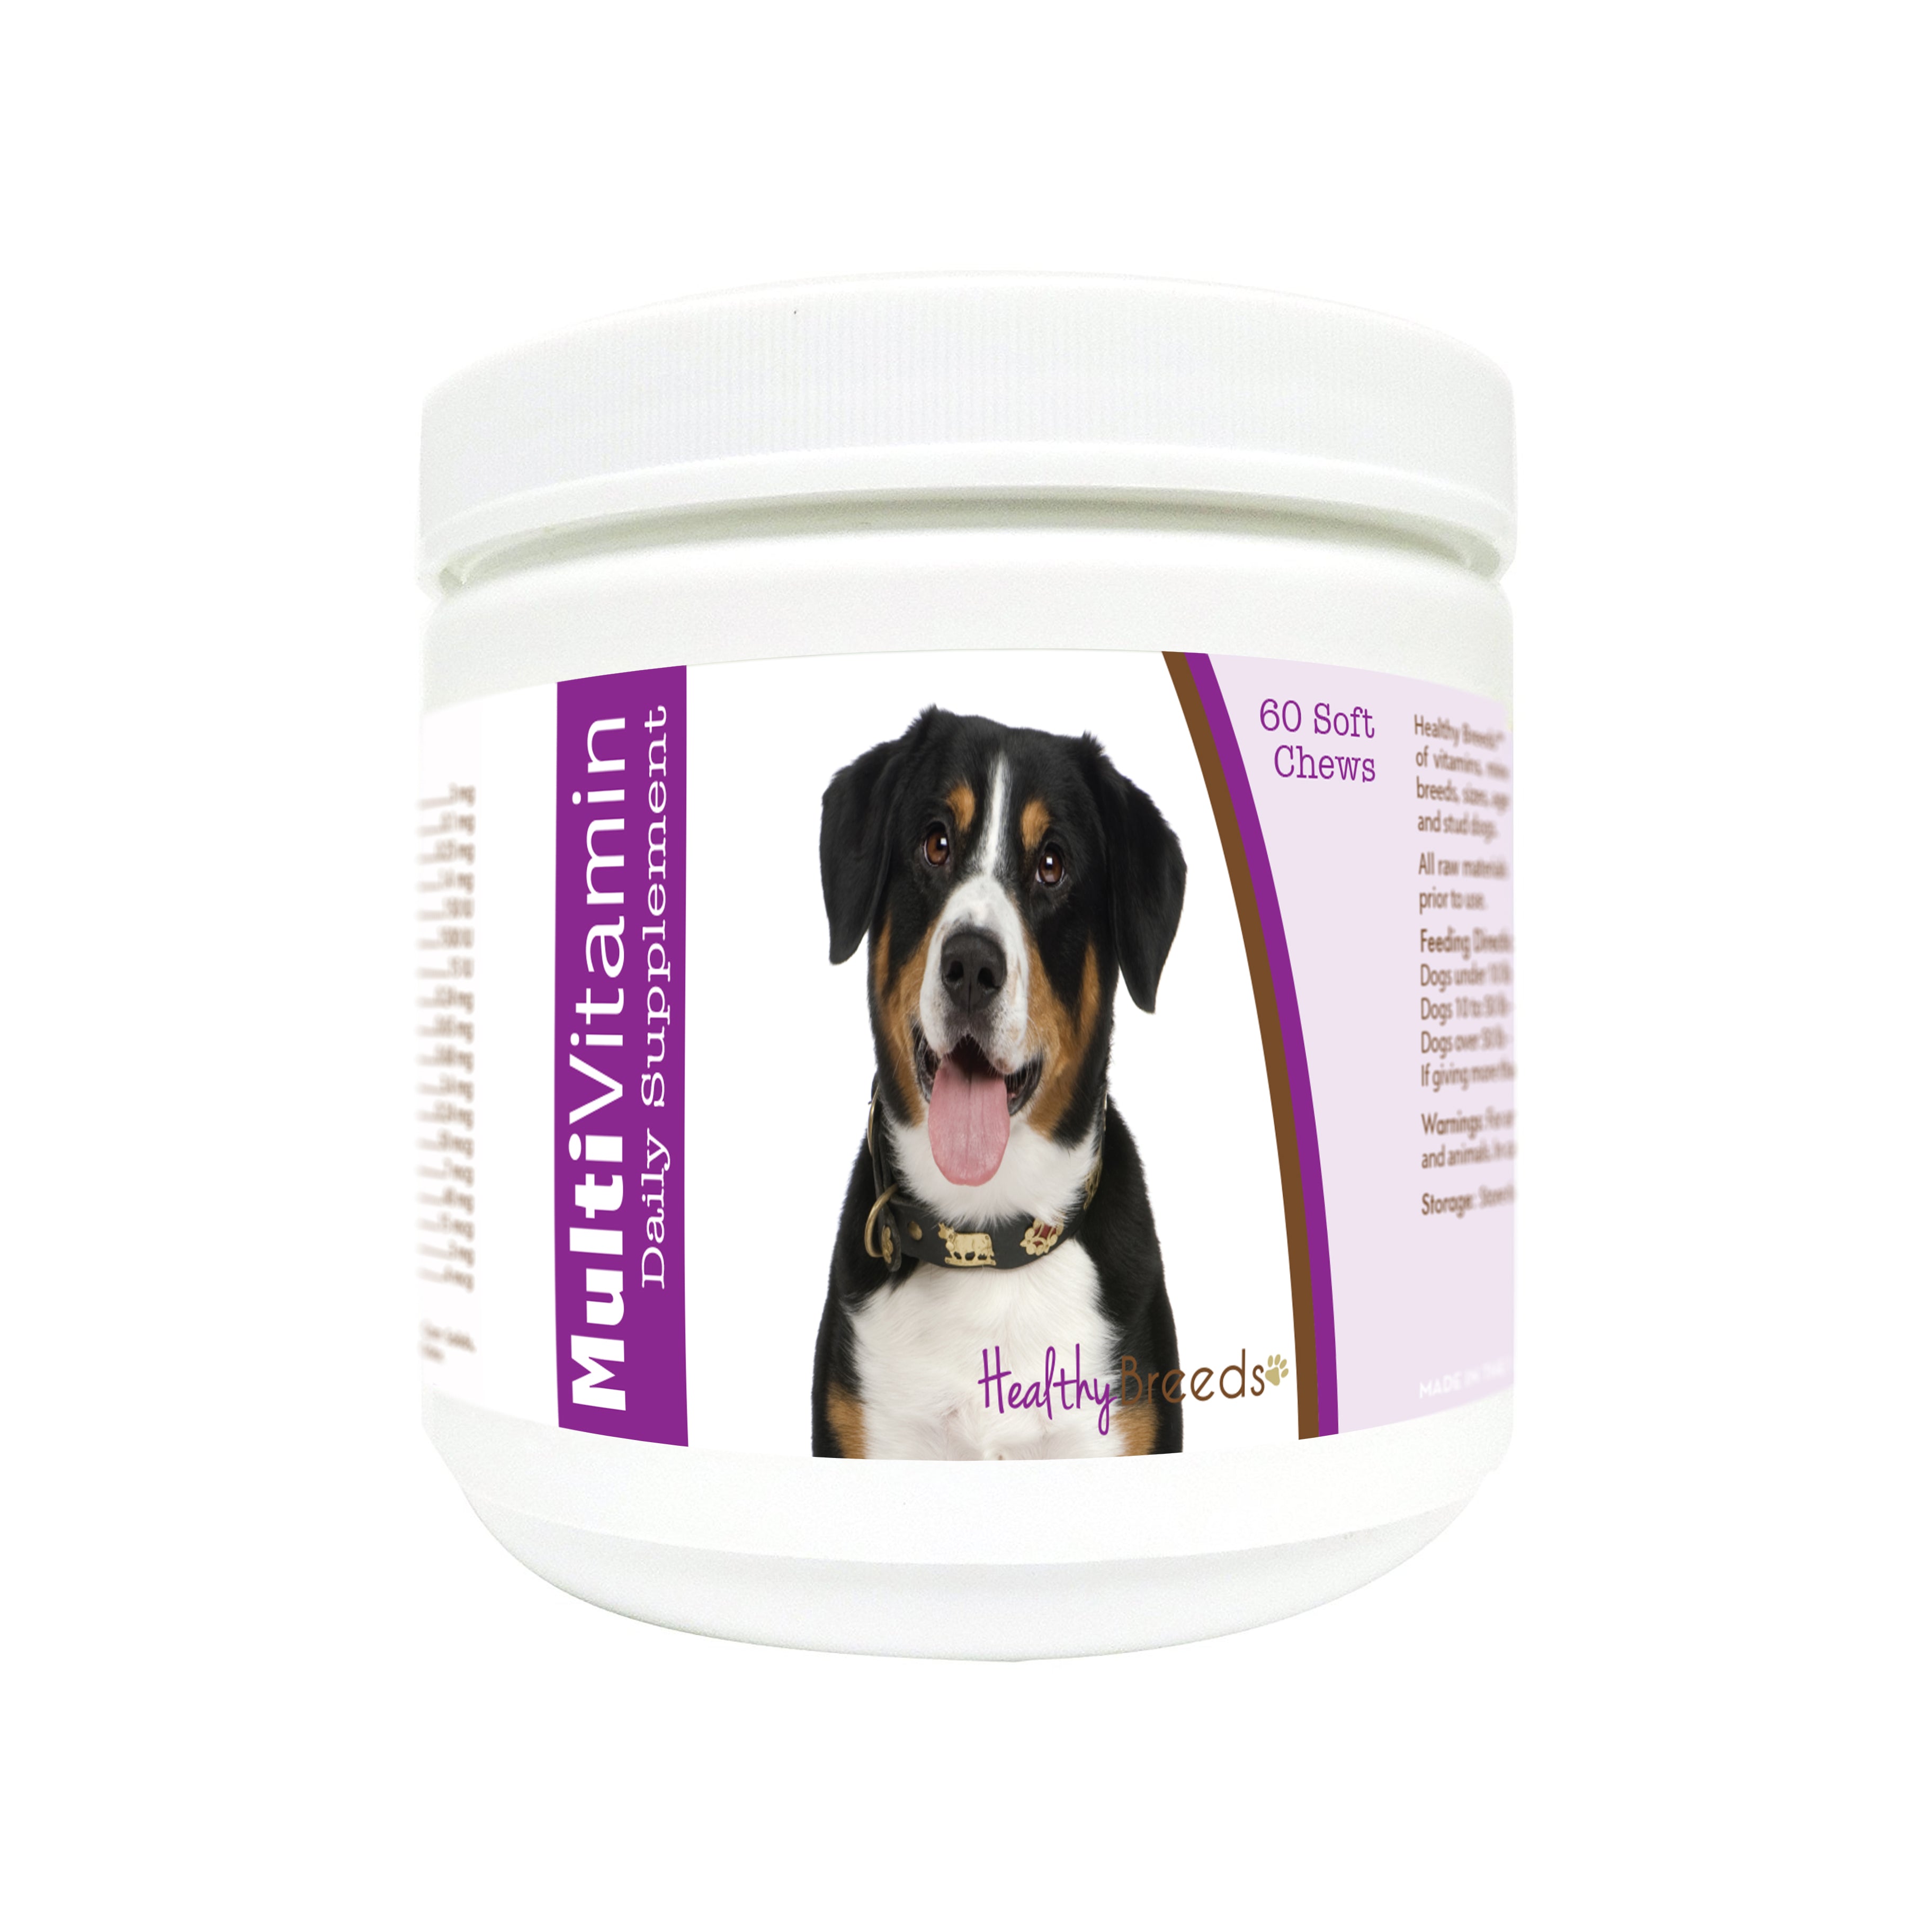 Entlebucher Mountain Dog Multi-Vitamin Soft Chews 60 Count